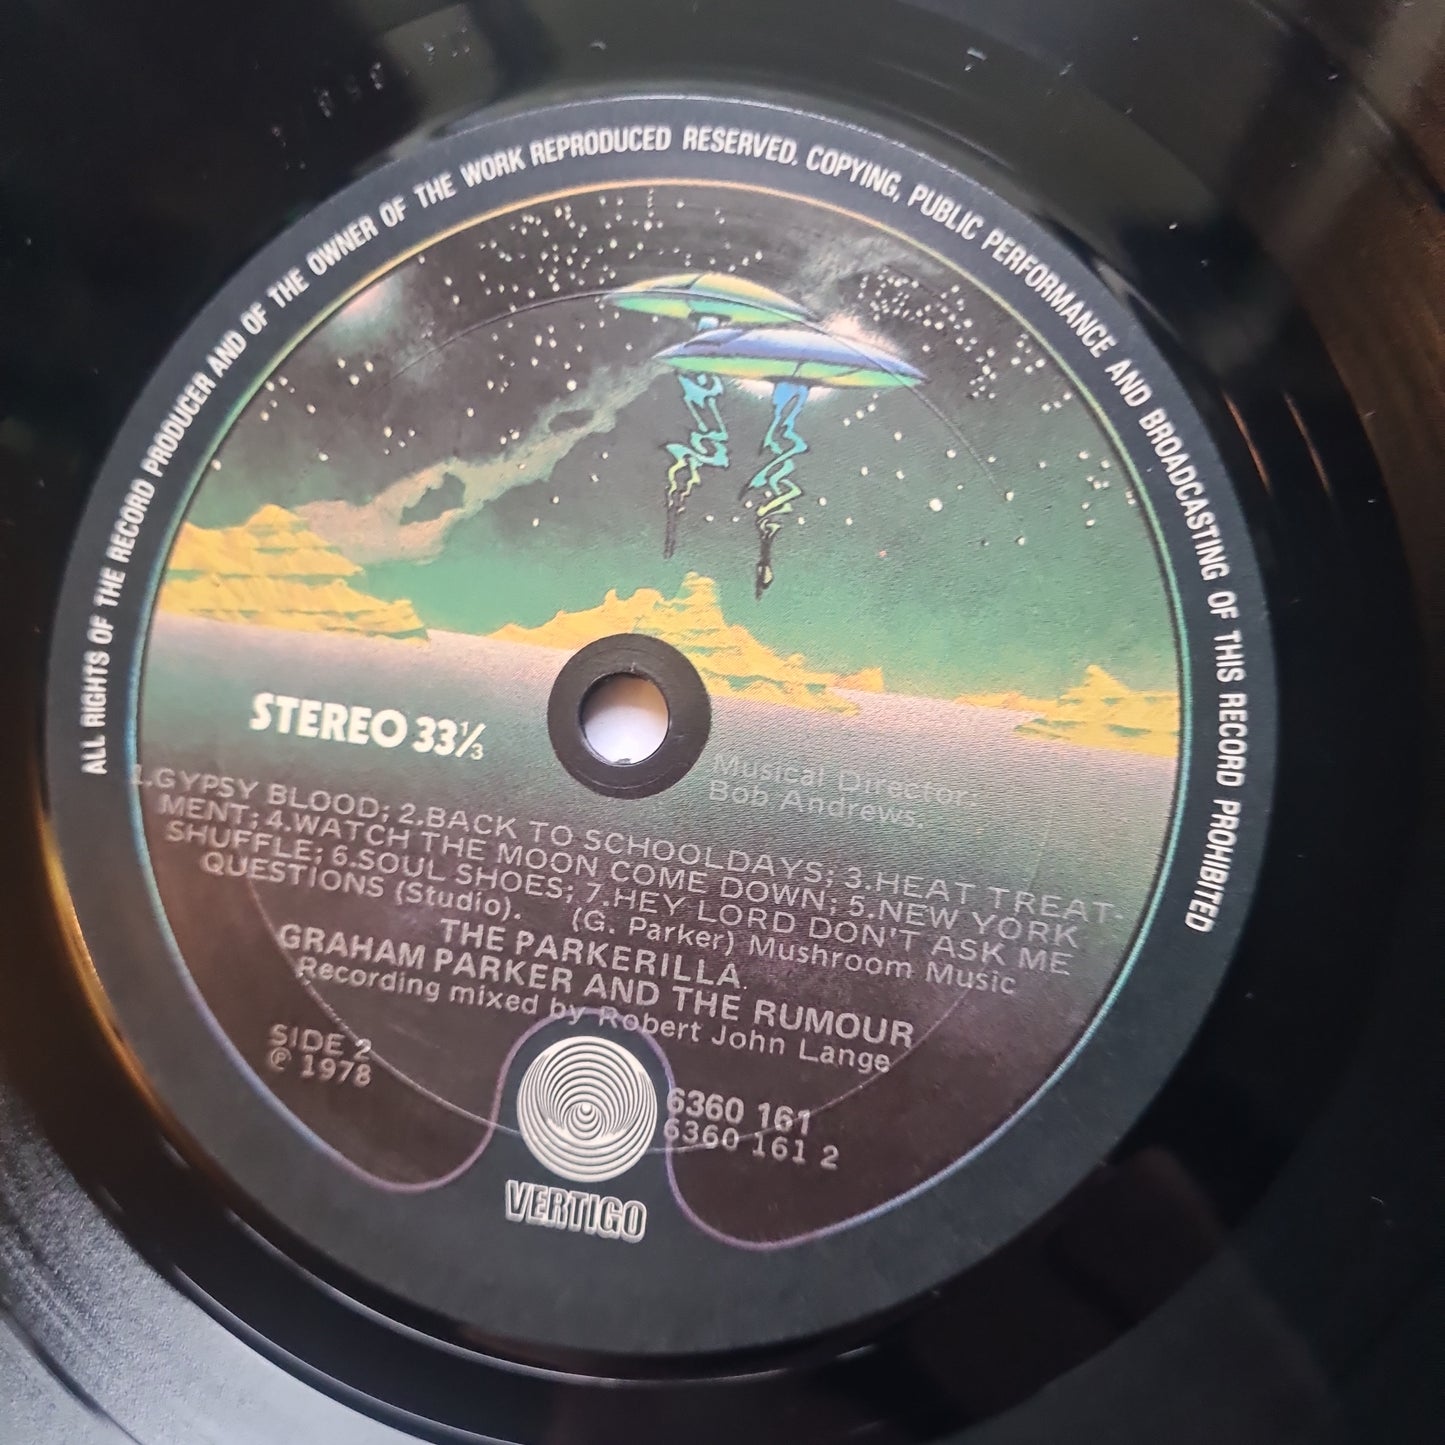 Graham Parker And The Rumour – The Parkerilla - 1978 Gatefold Vinyl Record